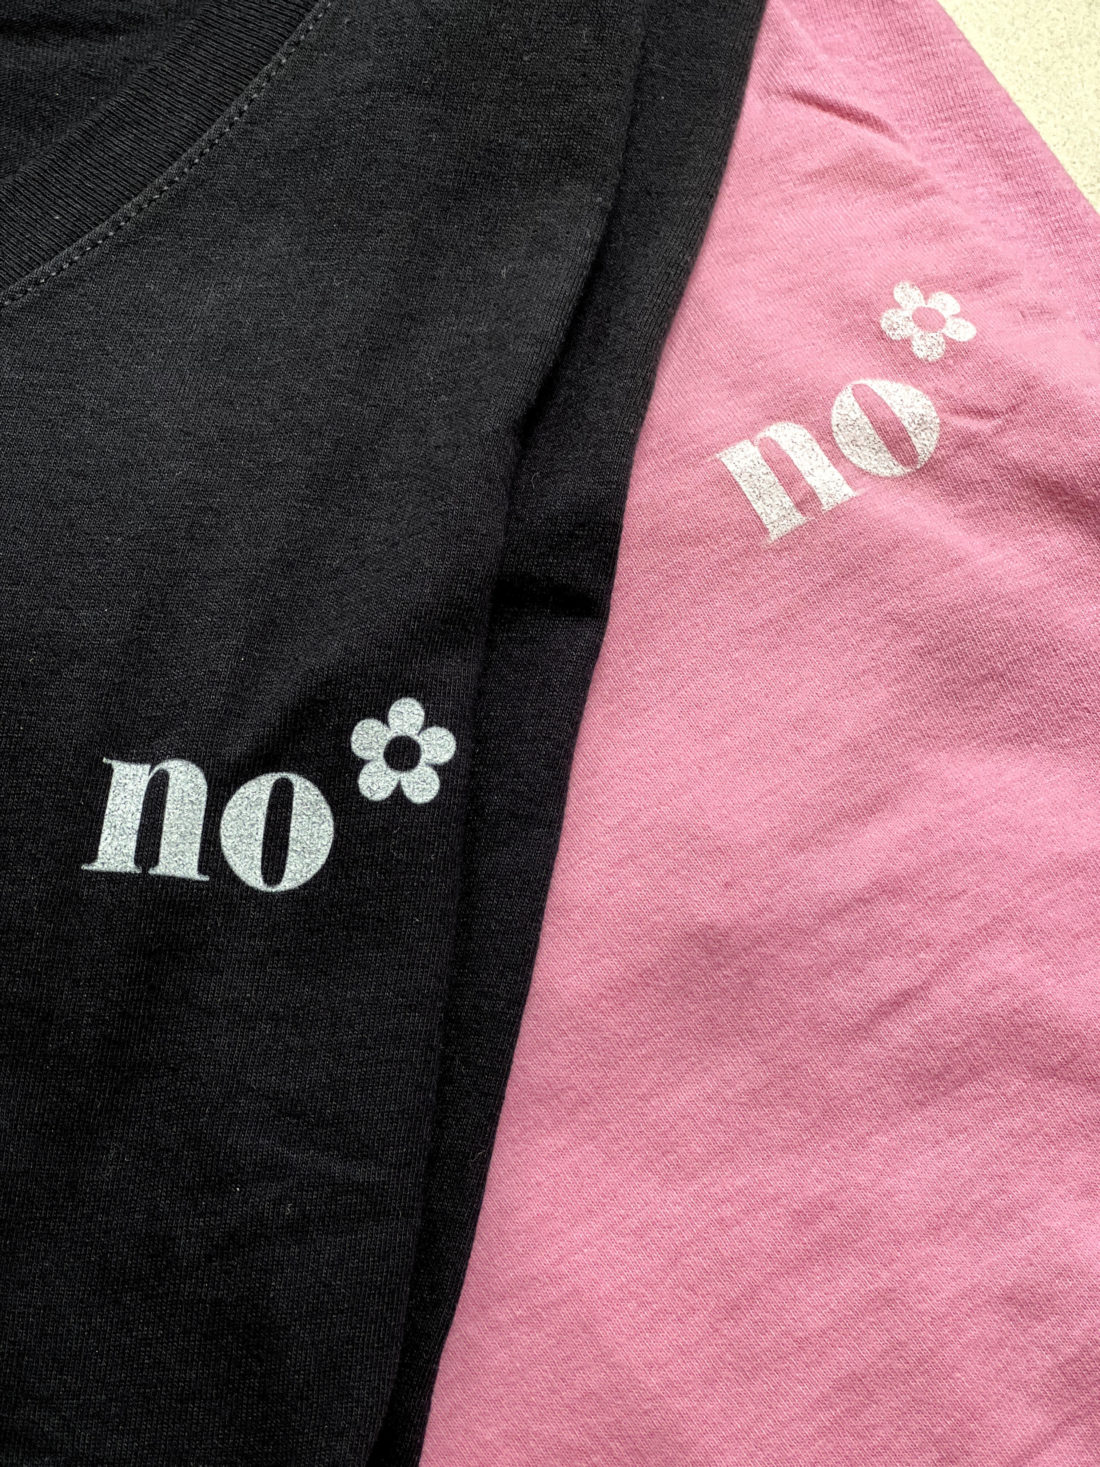 Friday Treat: Say Yes To Saying No T Shirts